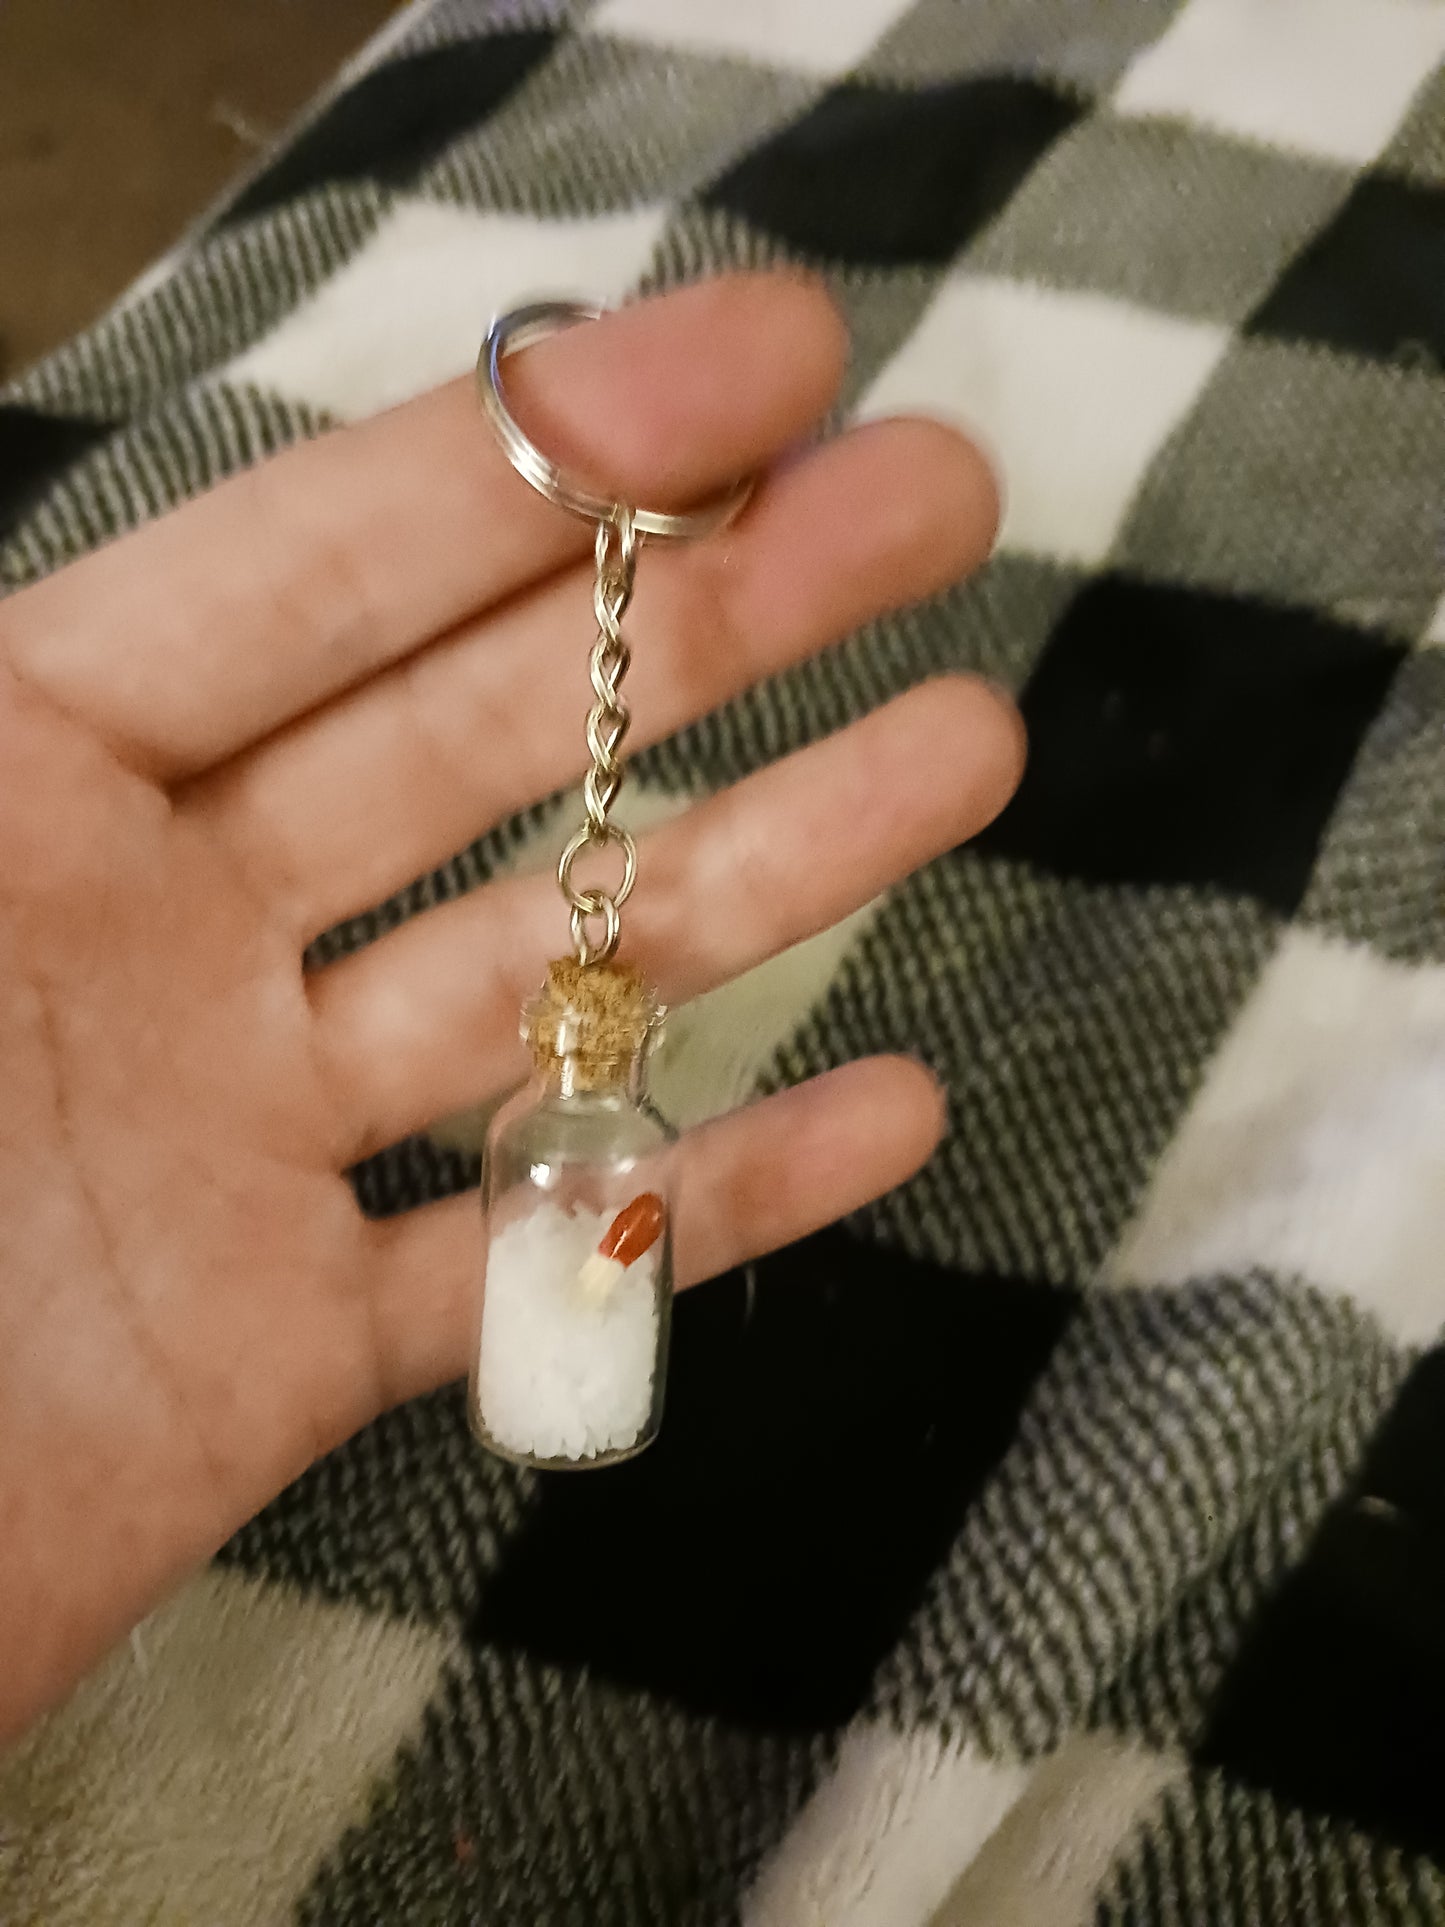 Handmade Salt & Burn necklace or keychain